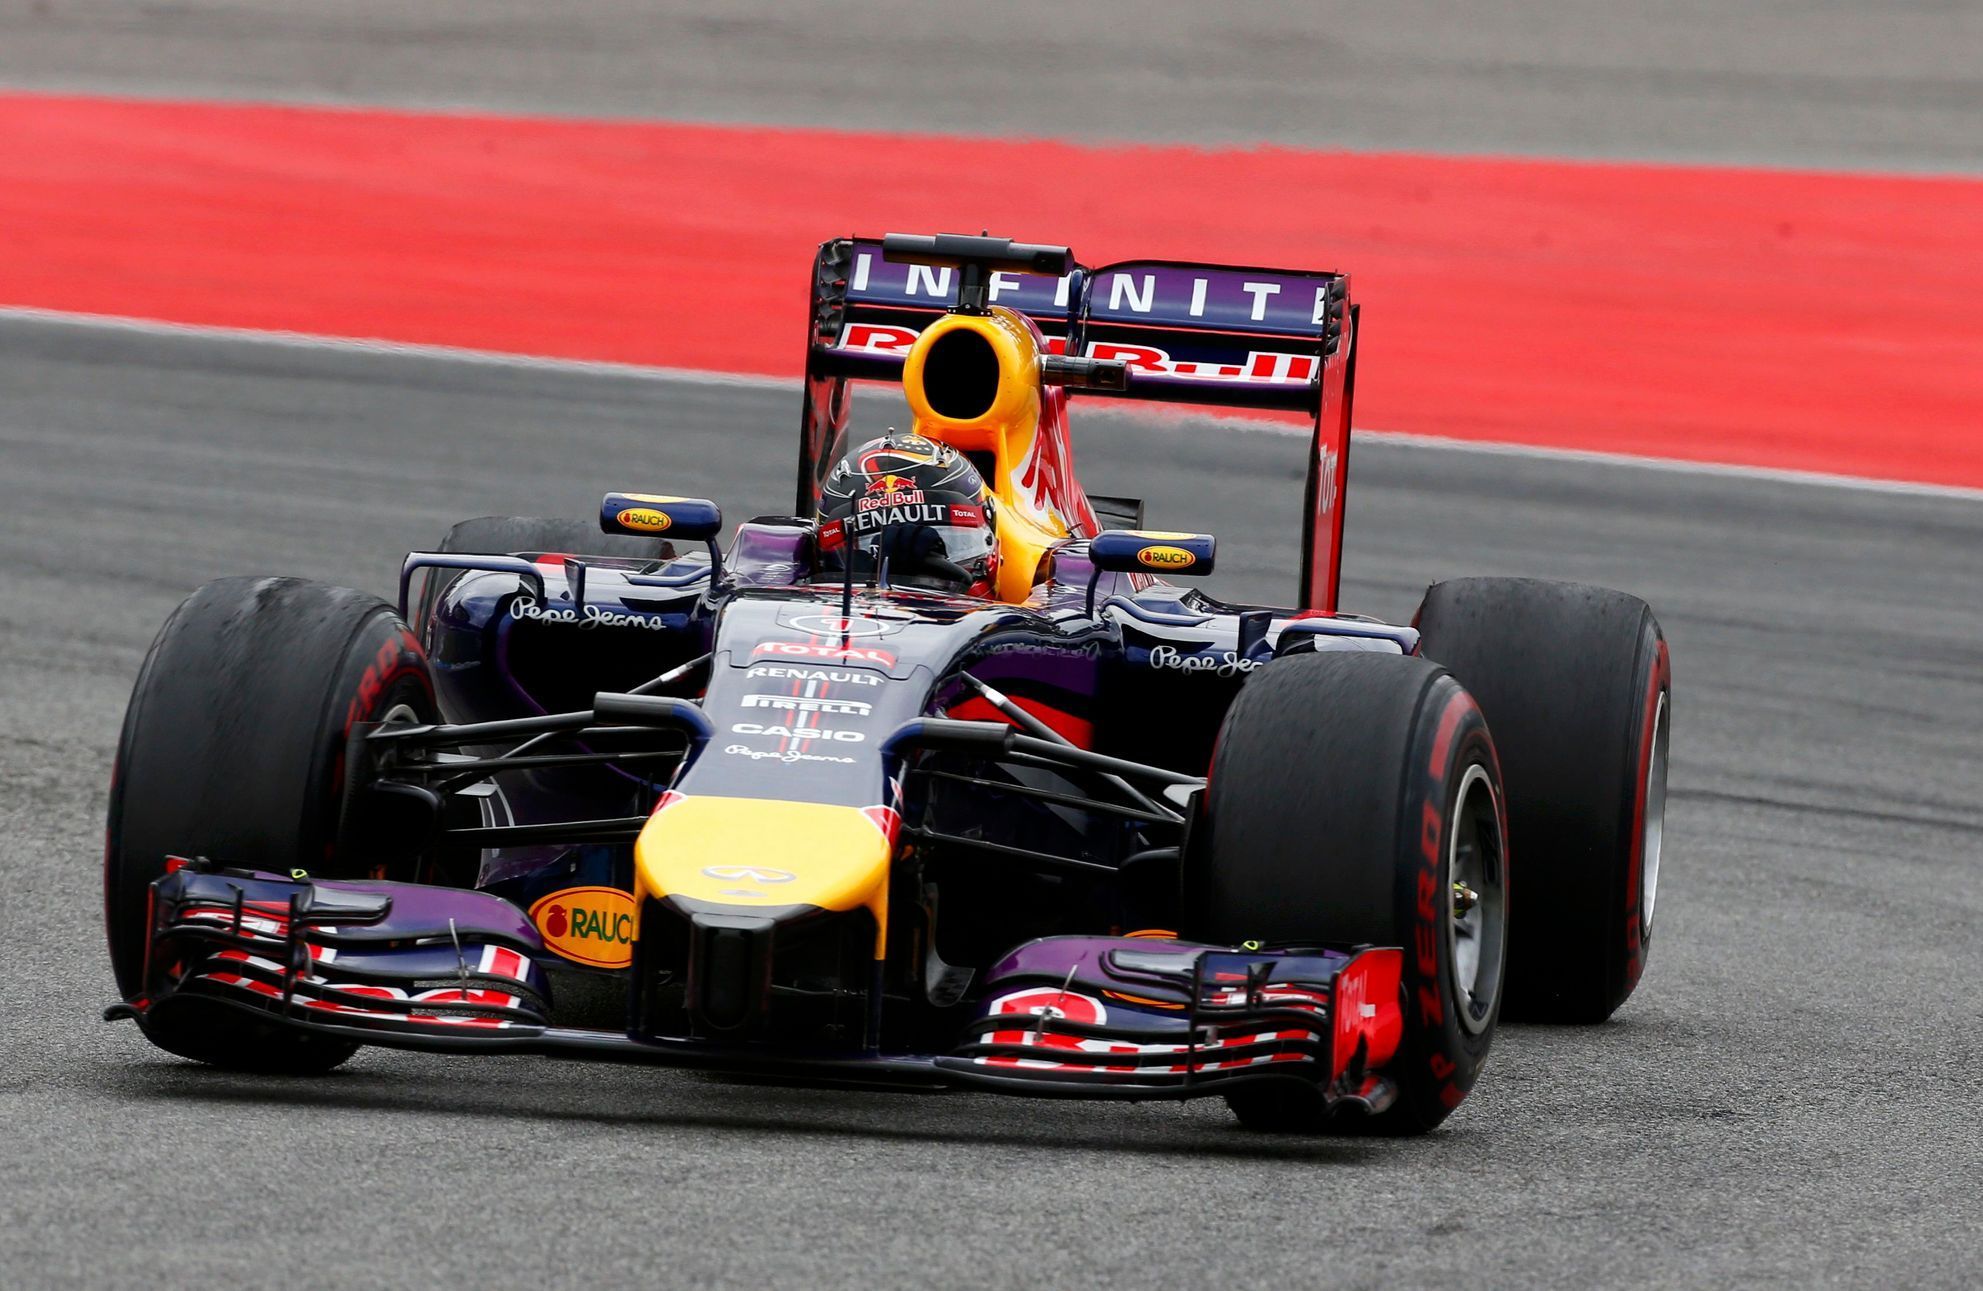 Red Bull Formula One driver Vettel drives through a corner during German F1 Grand Prix at Hockenheim